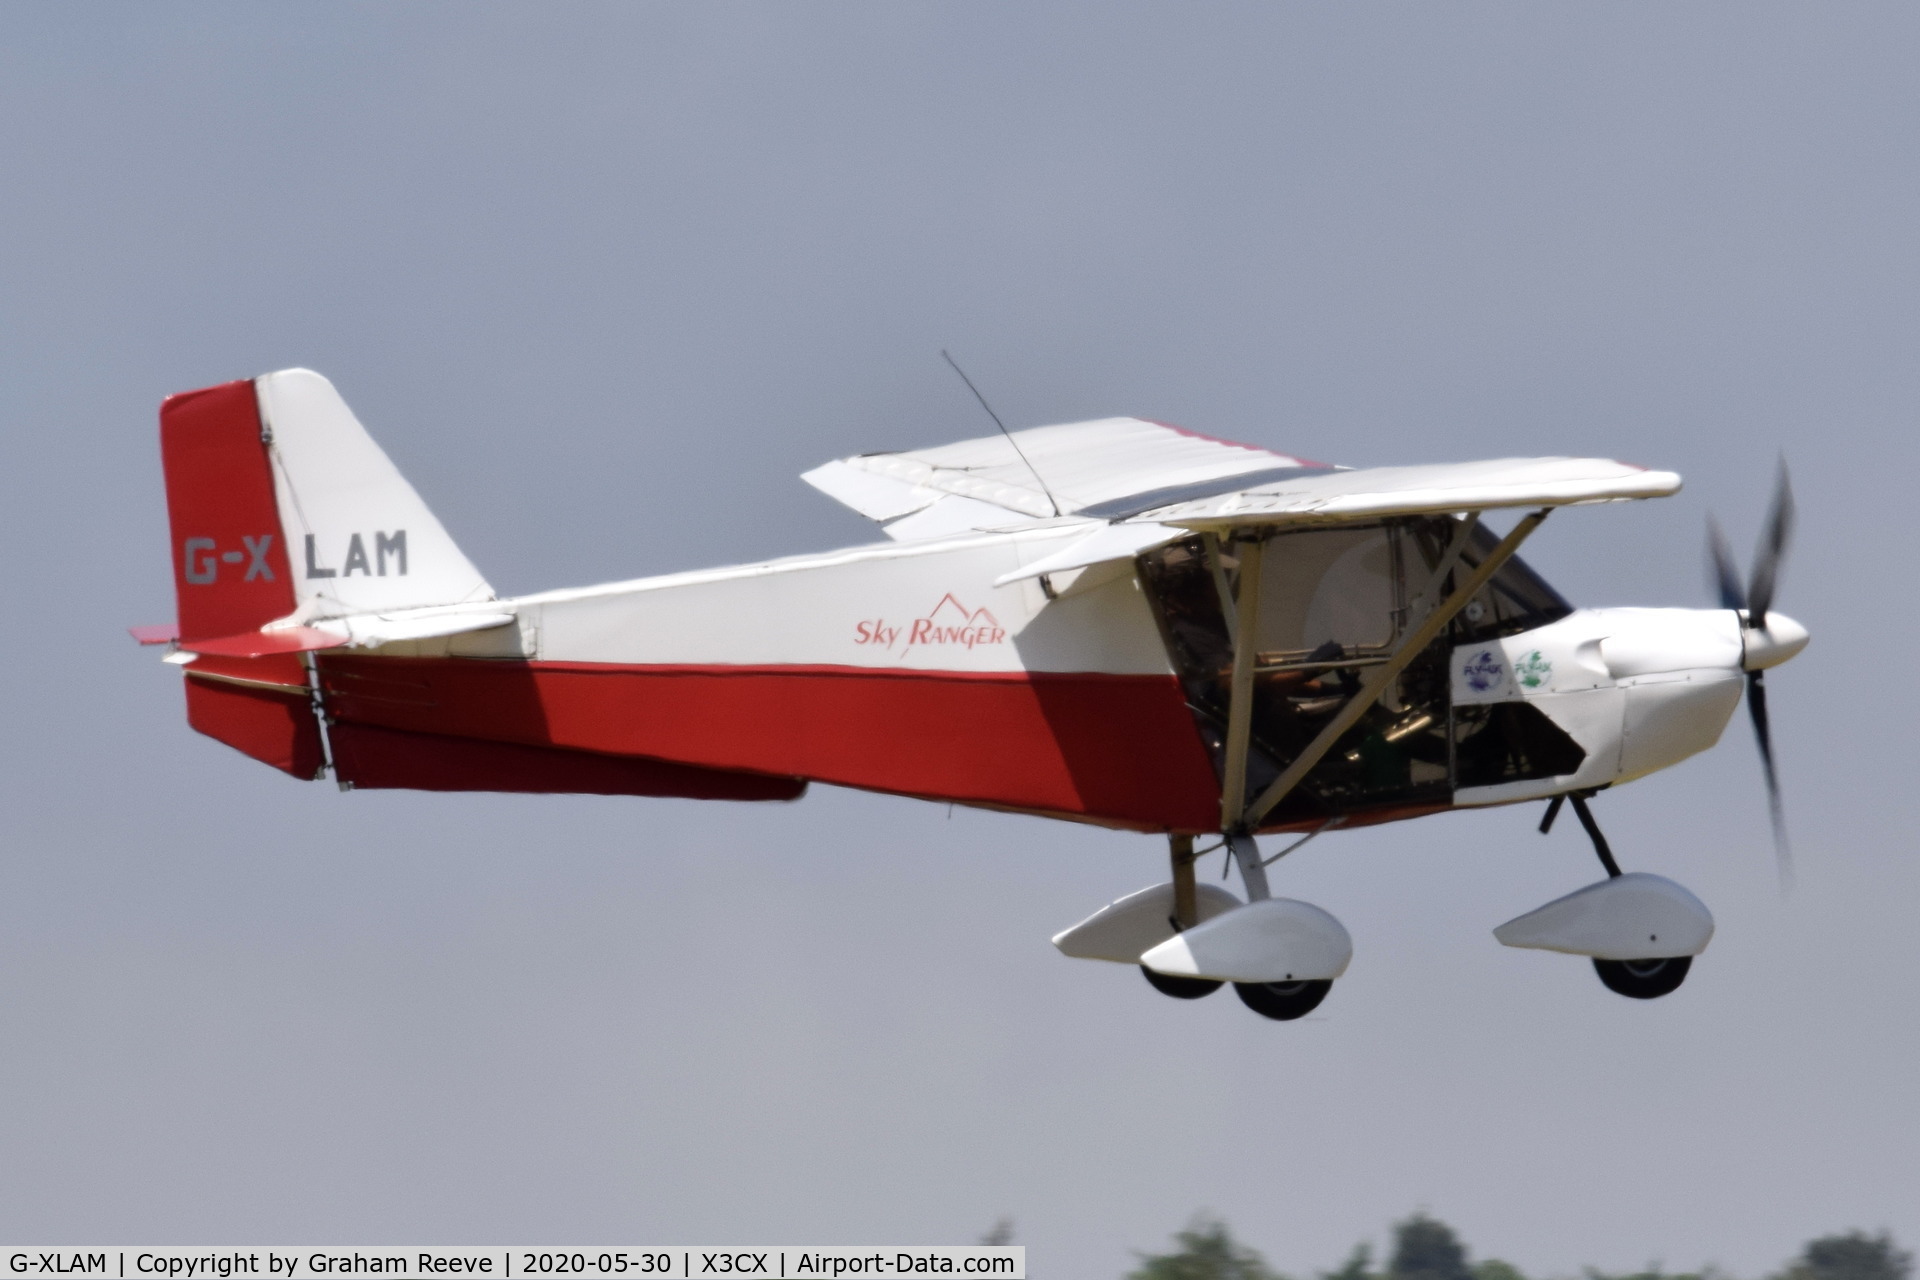 G-XLAM, 2005 Best Off Skyranger Swift 912S(1) C/N BMAA/HB/460, Landing at Northrepps.